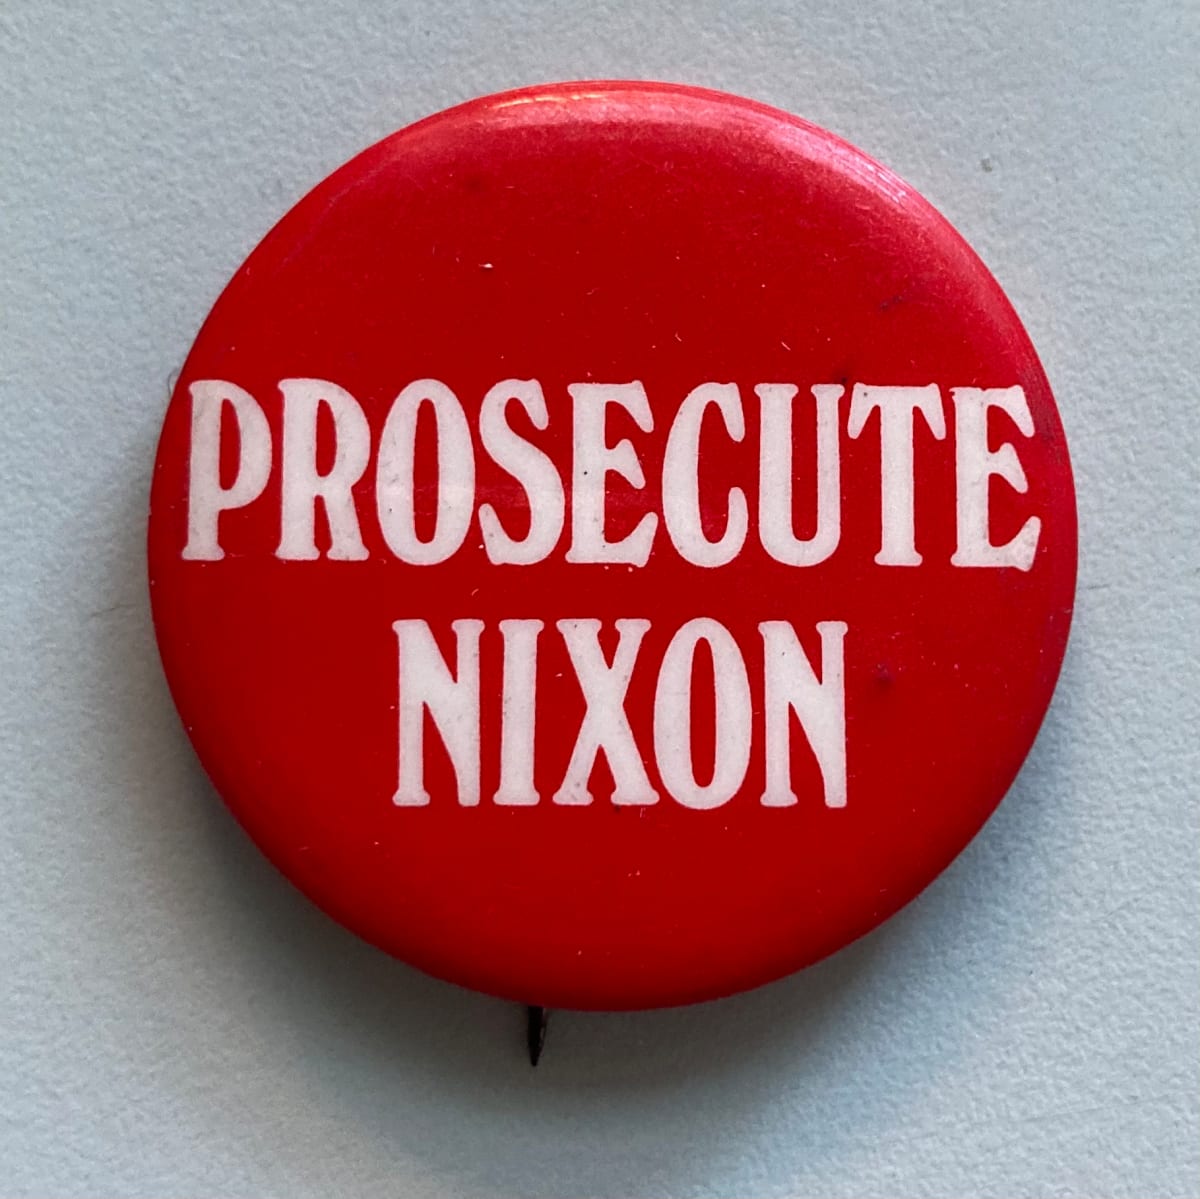 Prosecute Nixon button by political campaign 